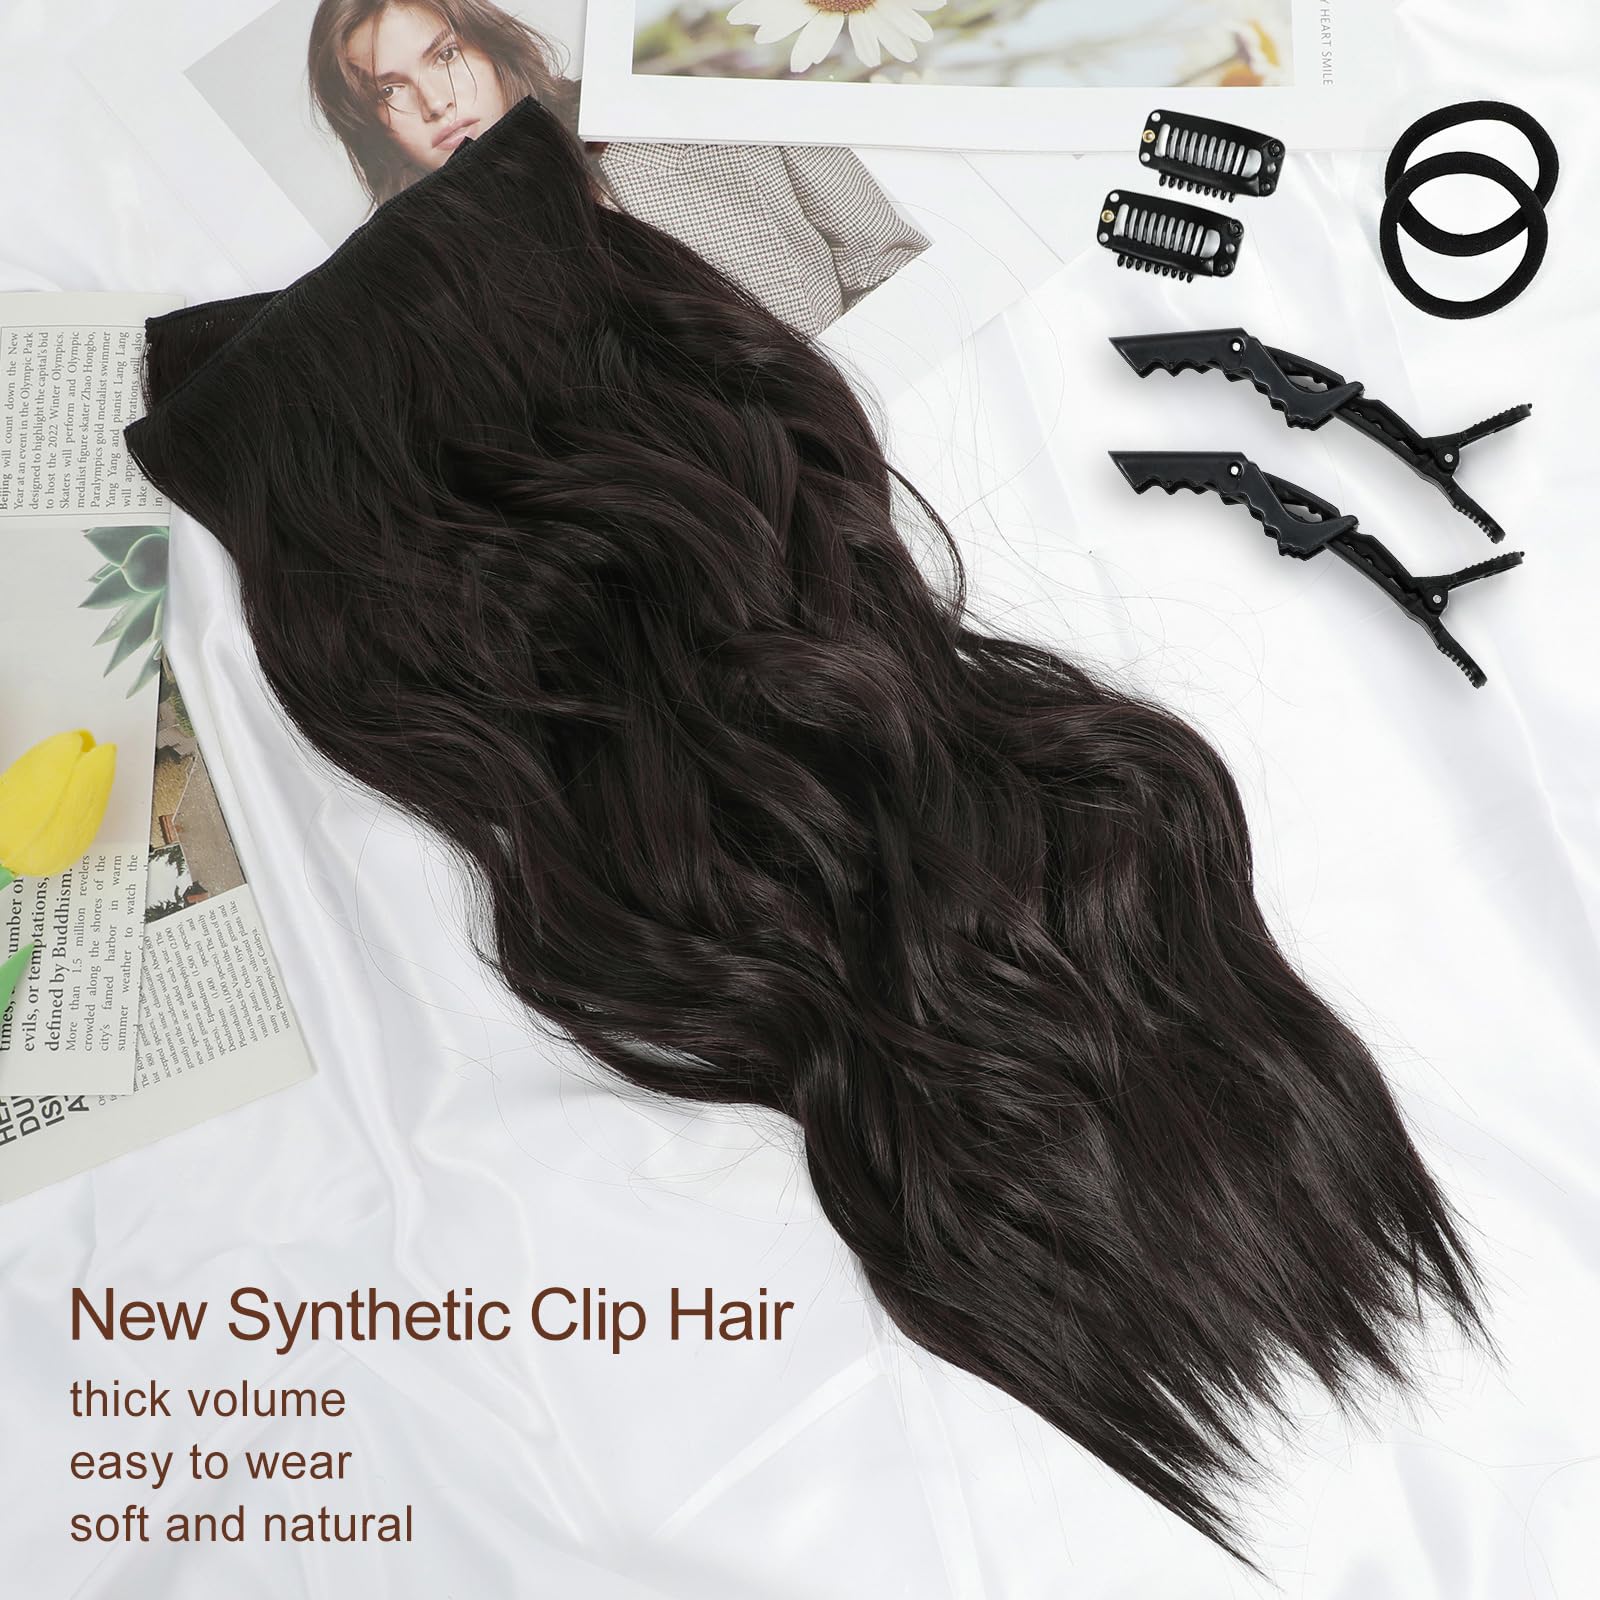 Details more than 73 banana clip hair extensions best - ceg.edu.vn